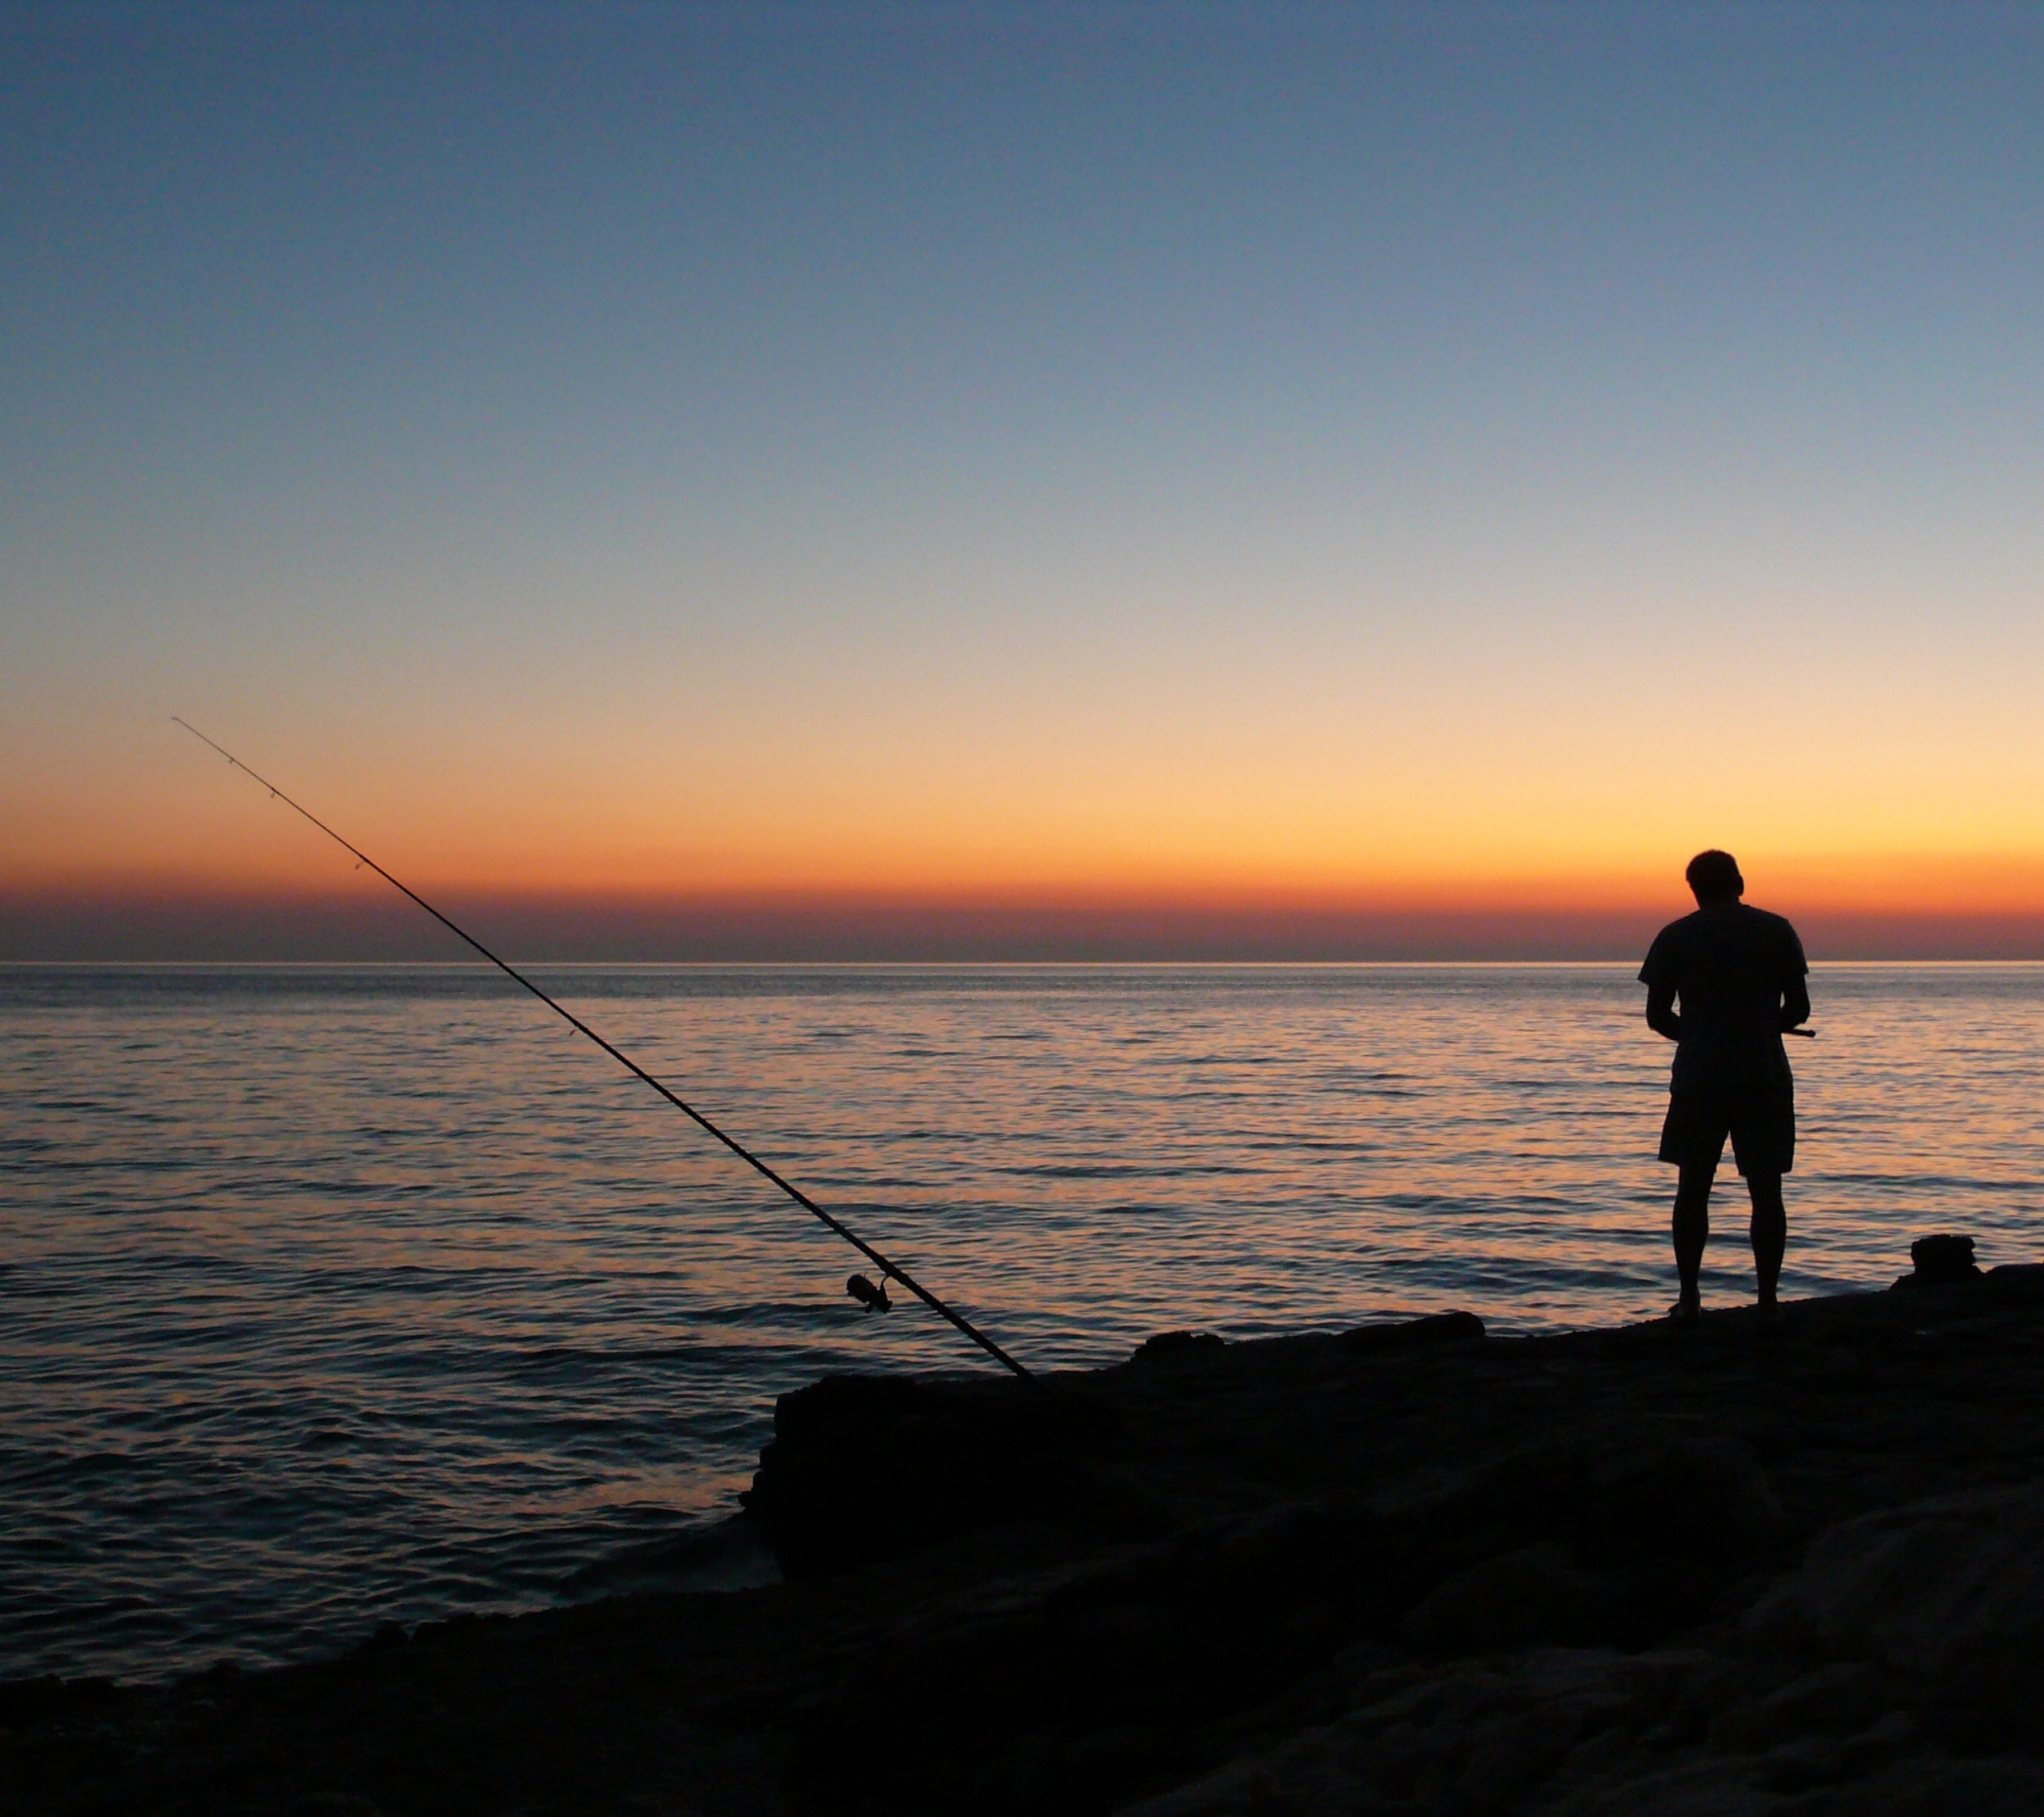 1273980 descargar imagen fotografía, pescador, silueta, horizonte, pescar, atardecer, puesta de sol, caña de pescar, océano: fondos de pantalla y protectores de pantalla gratis